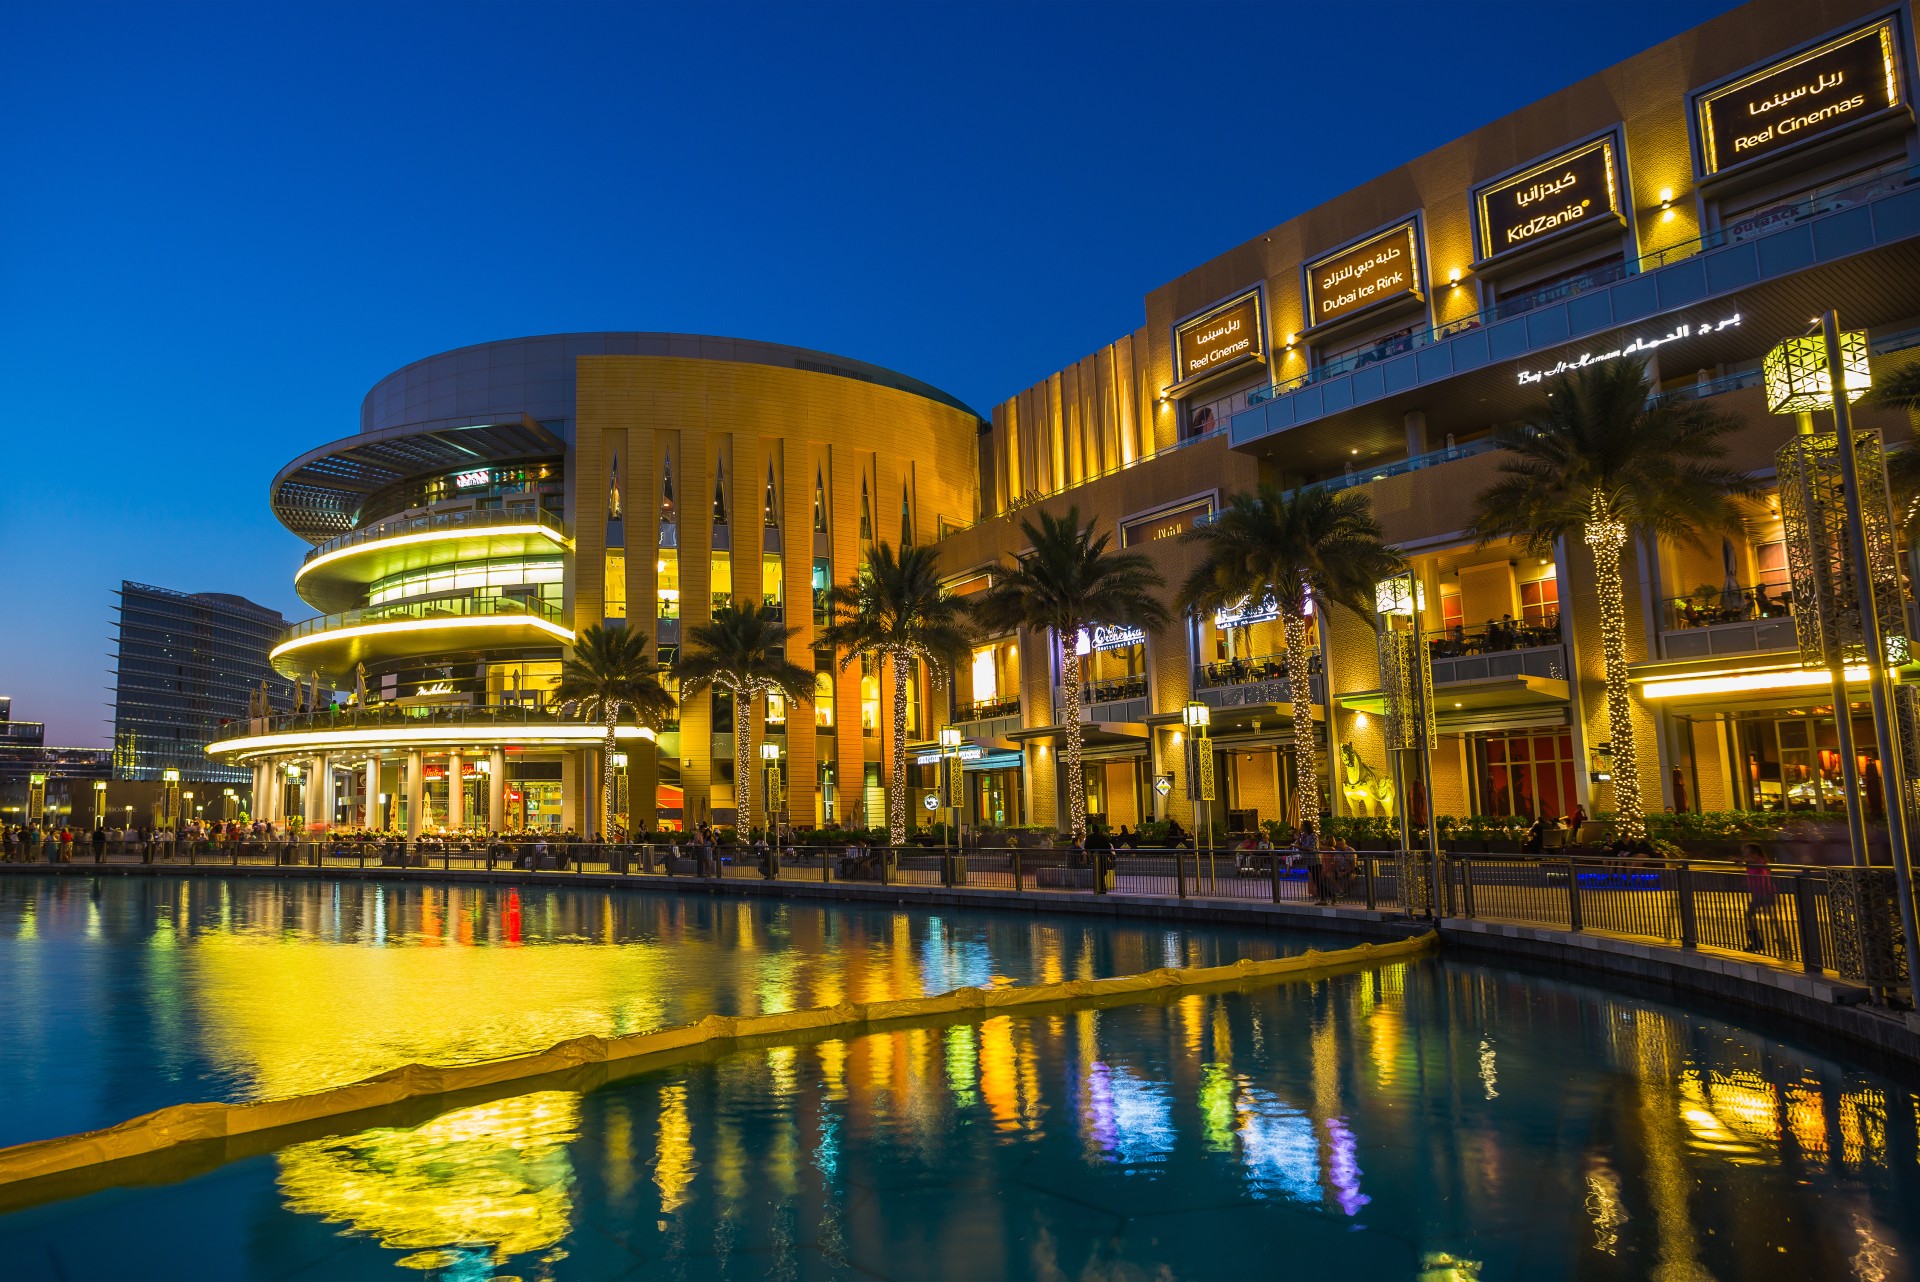 Evening view of the Dubai mall